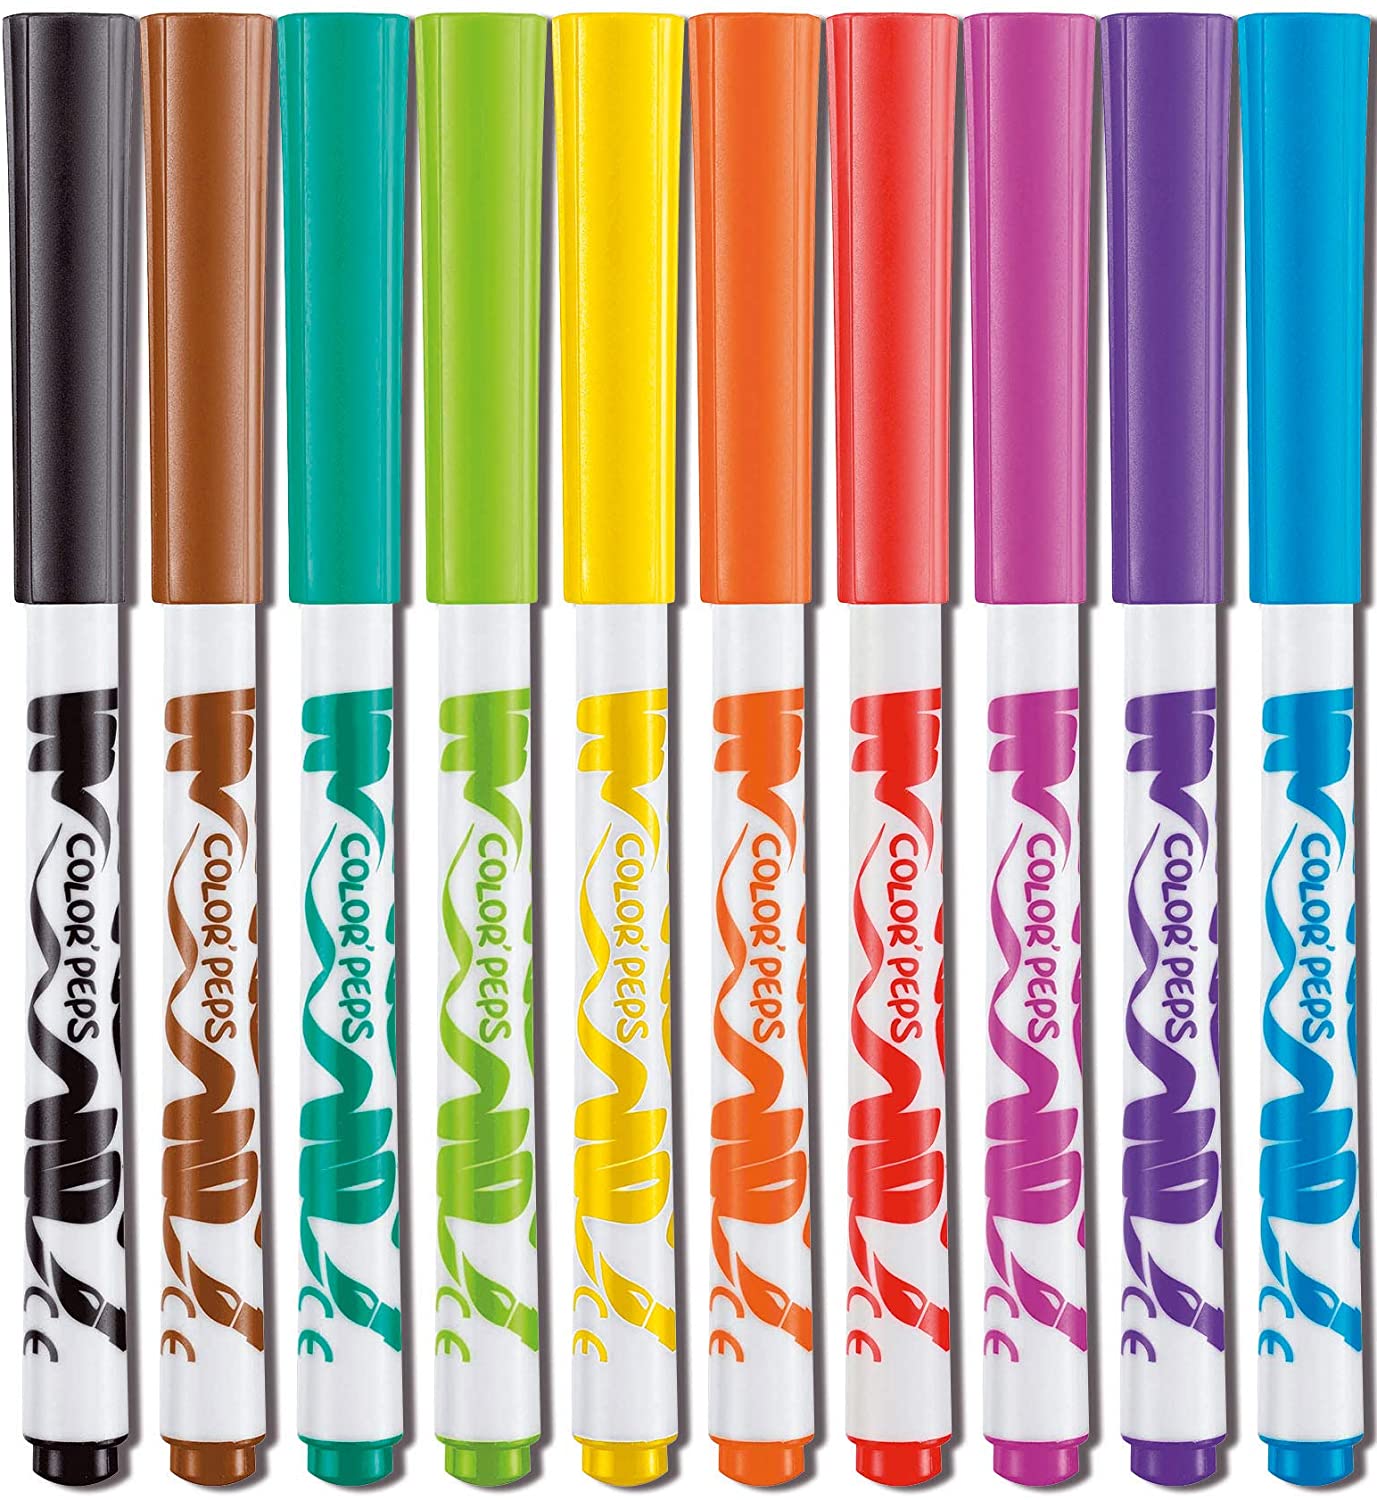 Maped Color Peps Brush  10 Colors || الوان شينيه مابد راس فرشاه 10 لون